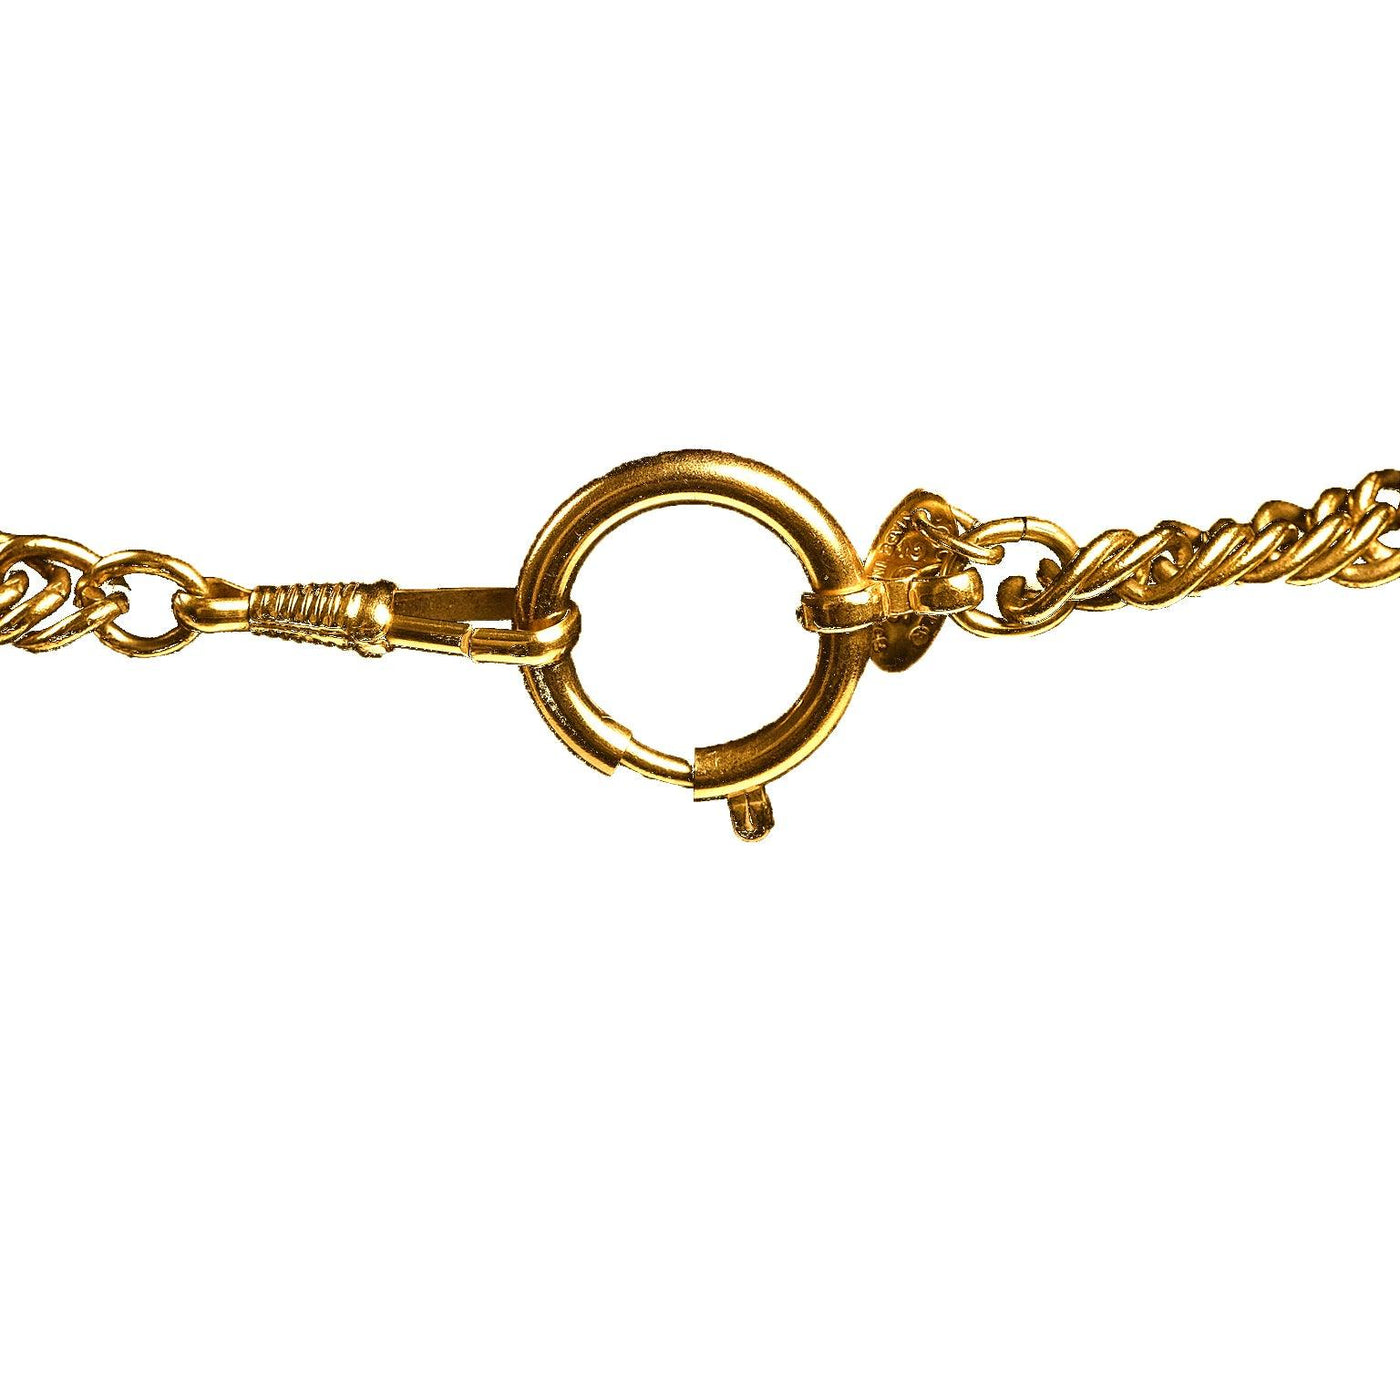 Chanel Red Gripoix Magnifier Monocle Necklace - Only Authentics